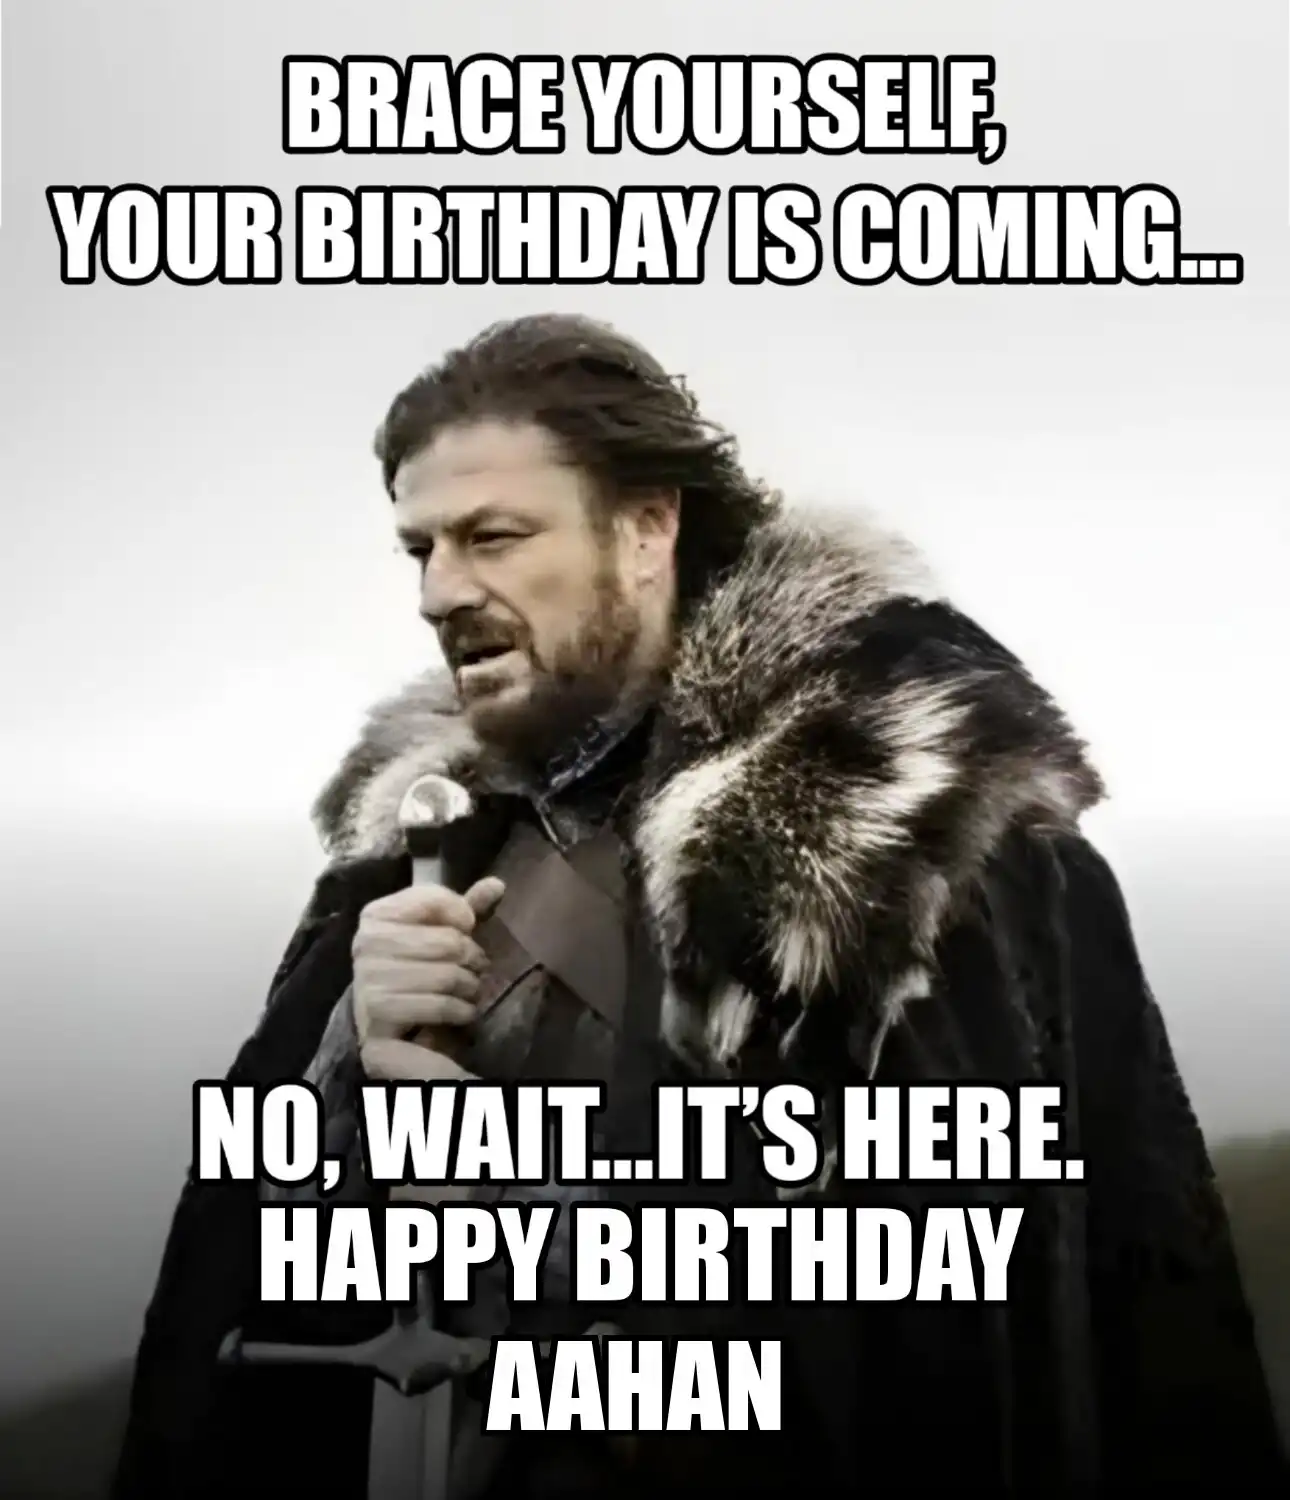 Happy Birthday Aahan Brace Yourself Your Birthday Is Coming Meme